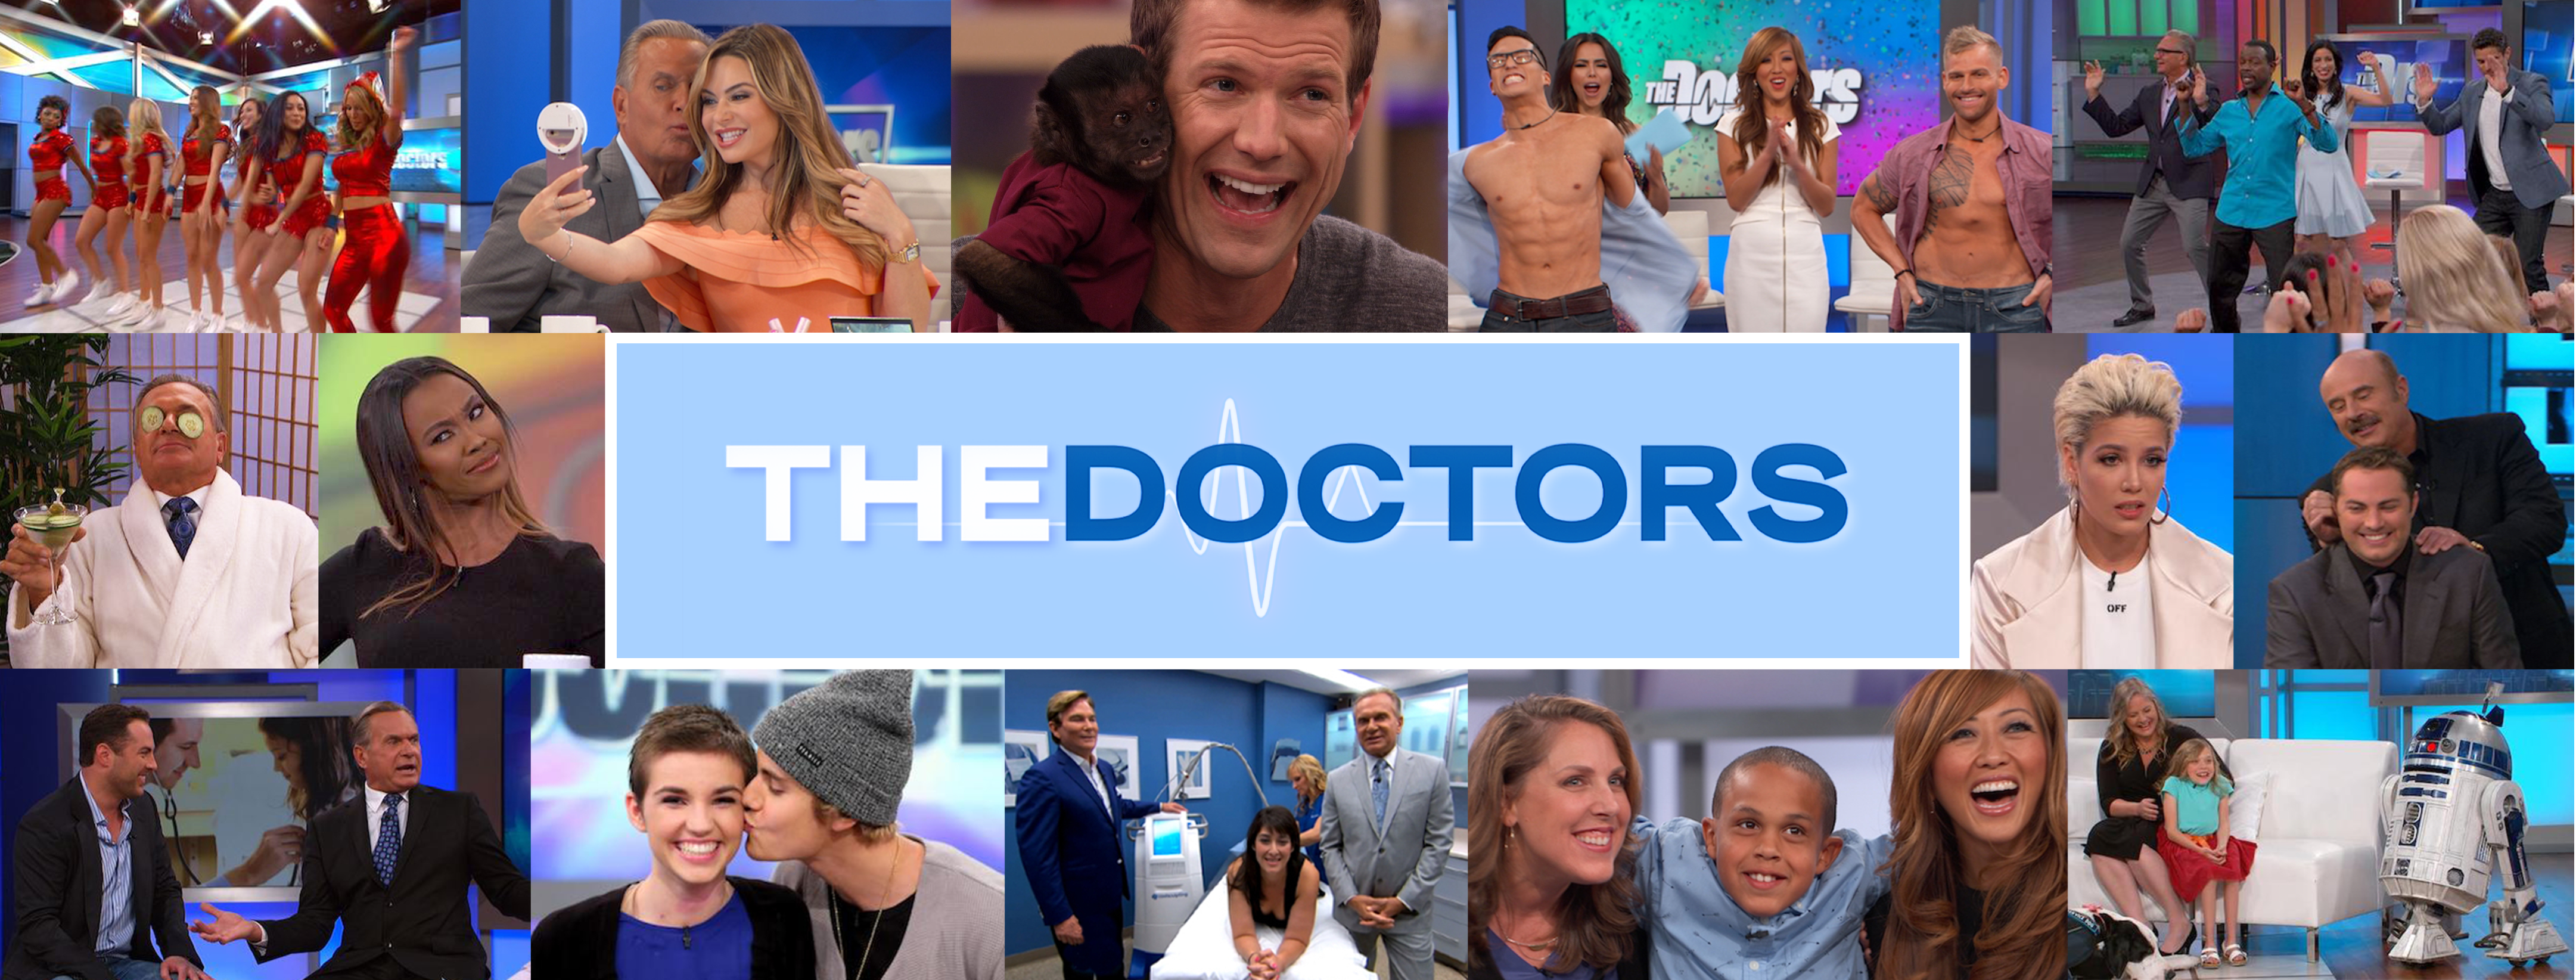 Dr Pimple Popper Answers Blackhead Mole Or Cyst The Doctors Tv Show